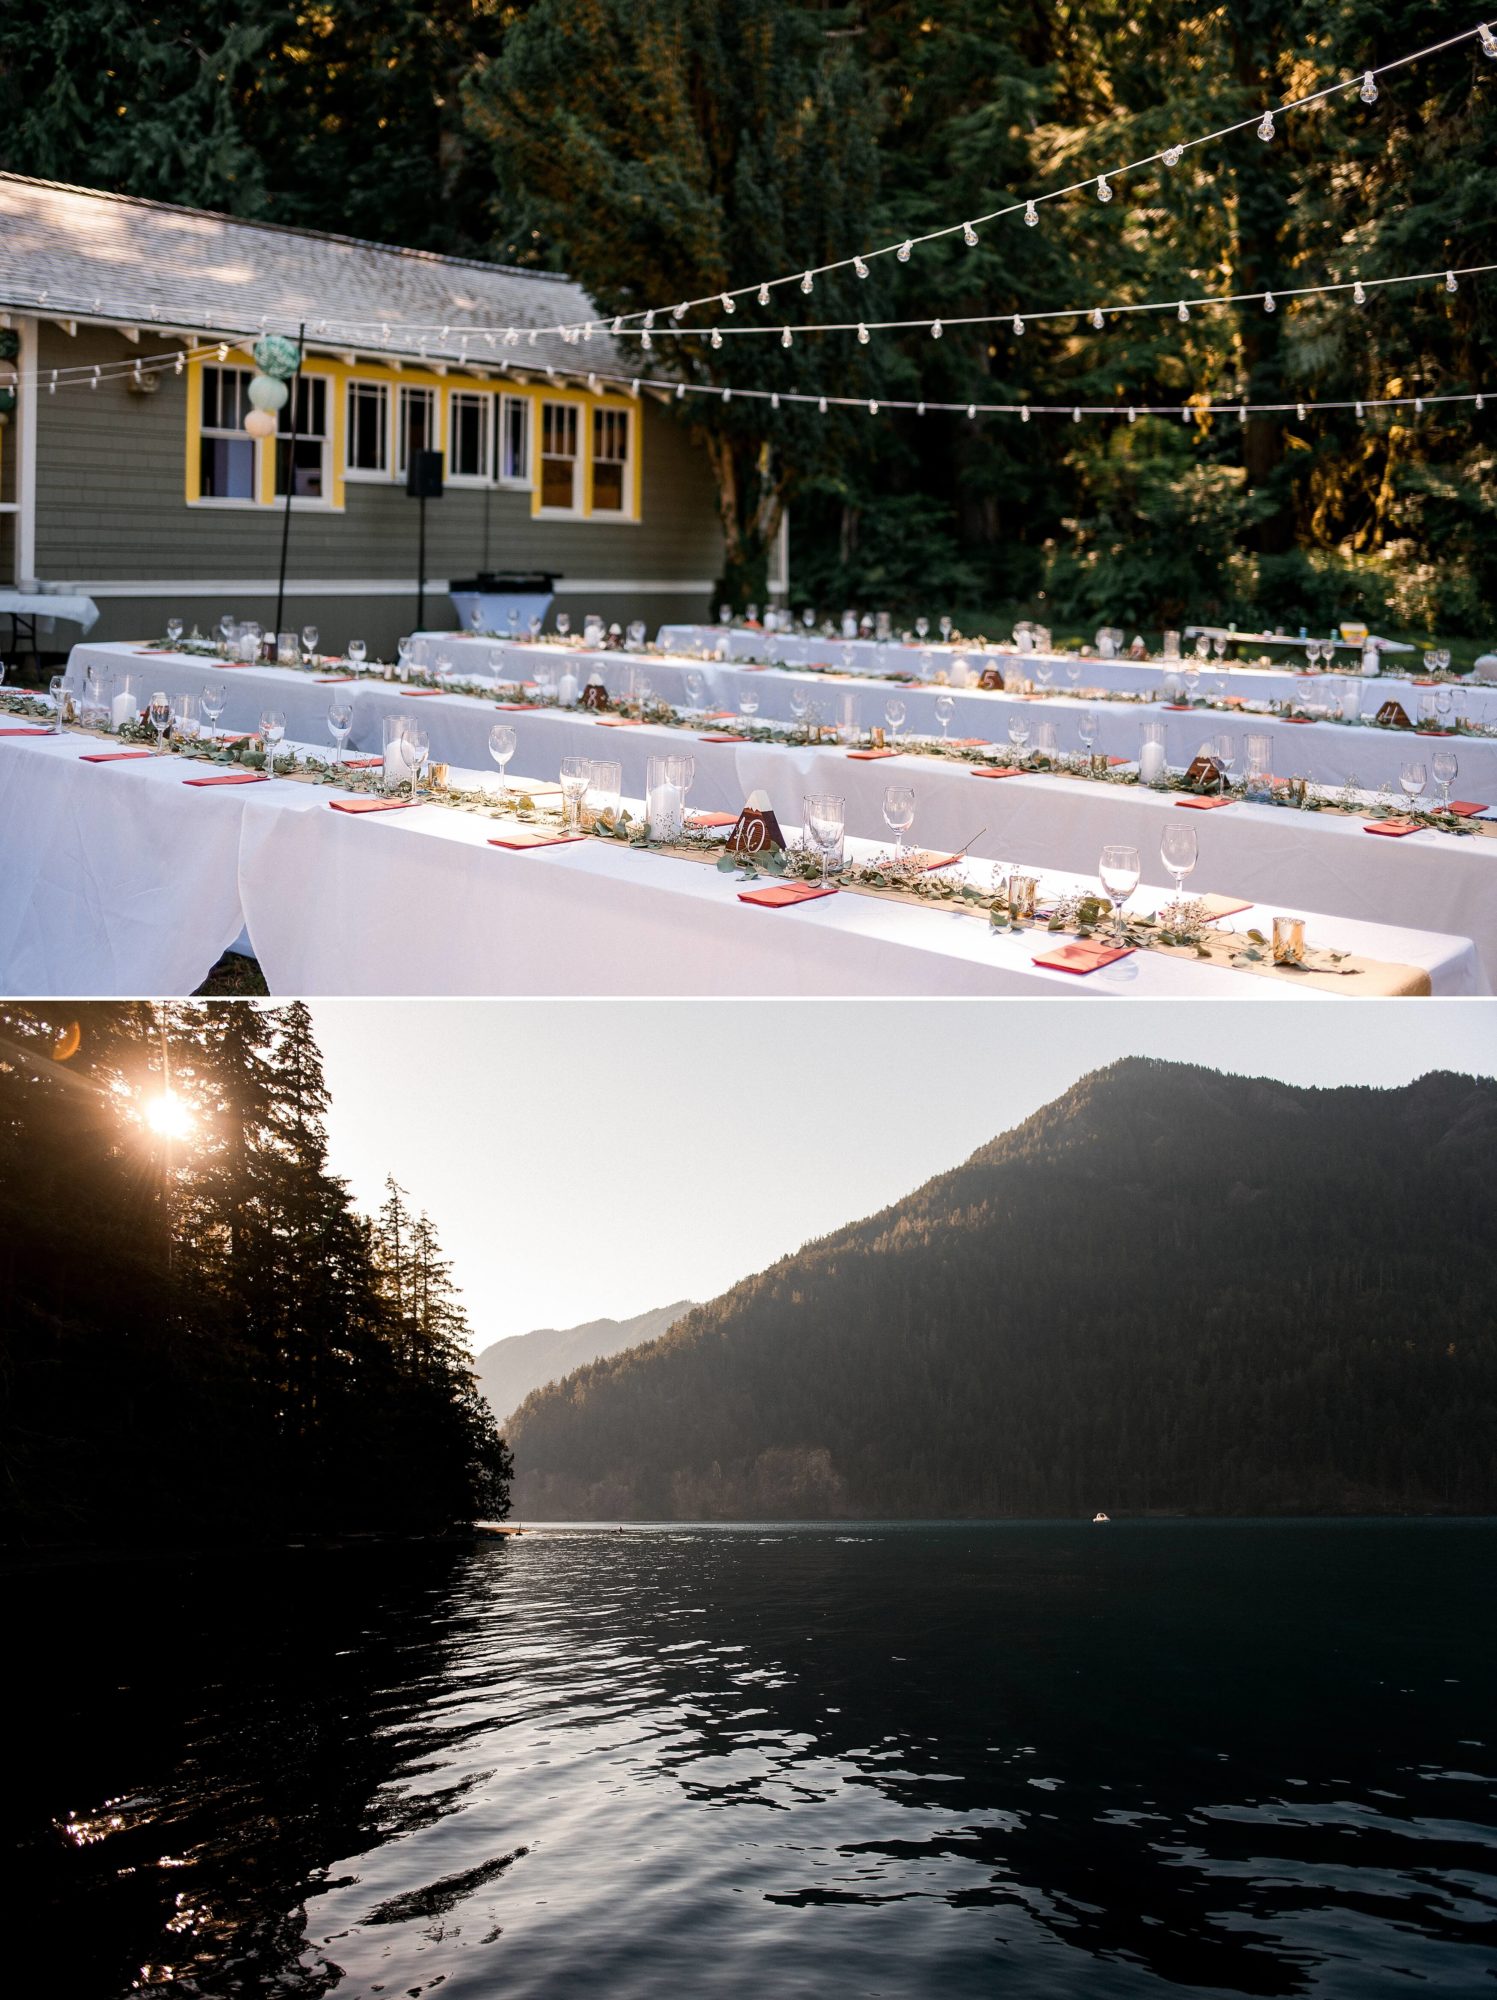 Lakefront outdoor wedding reception setup